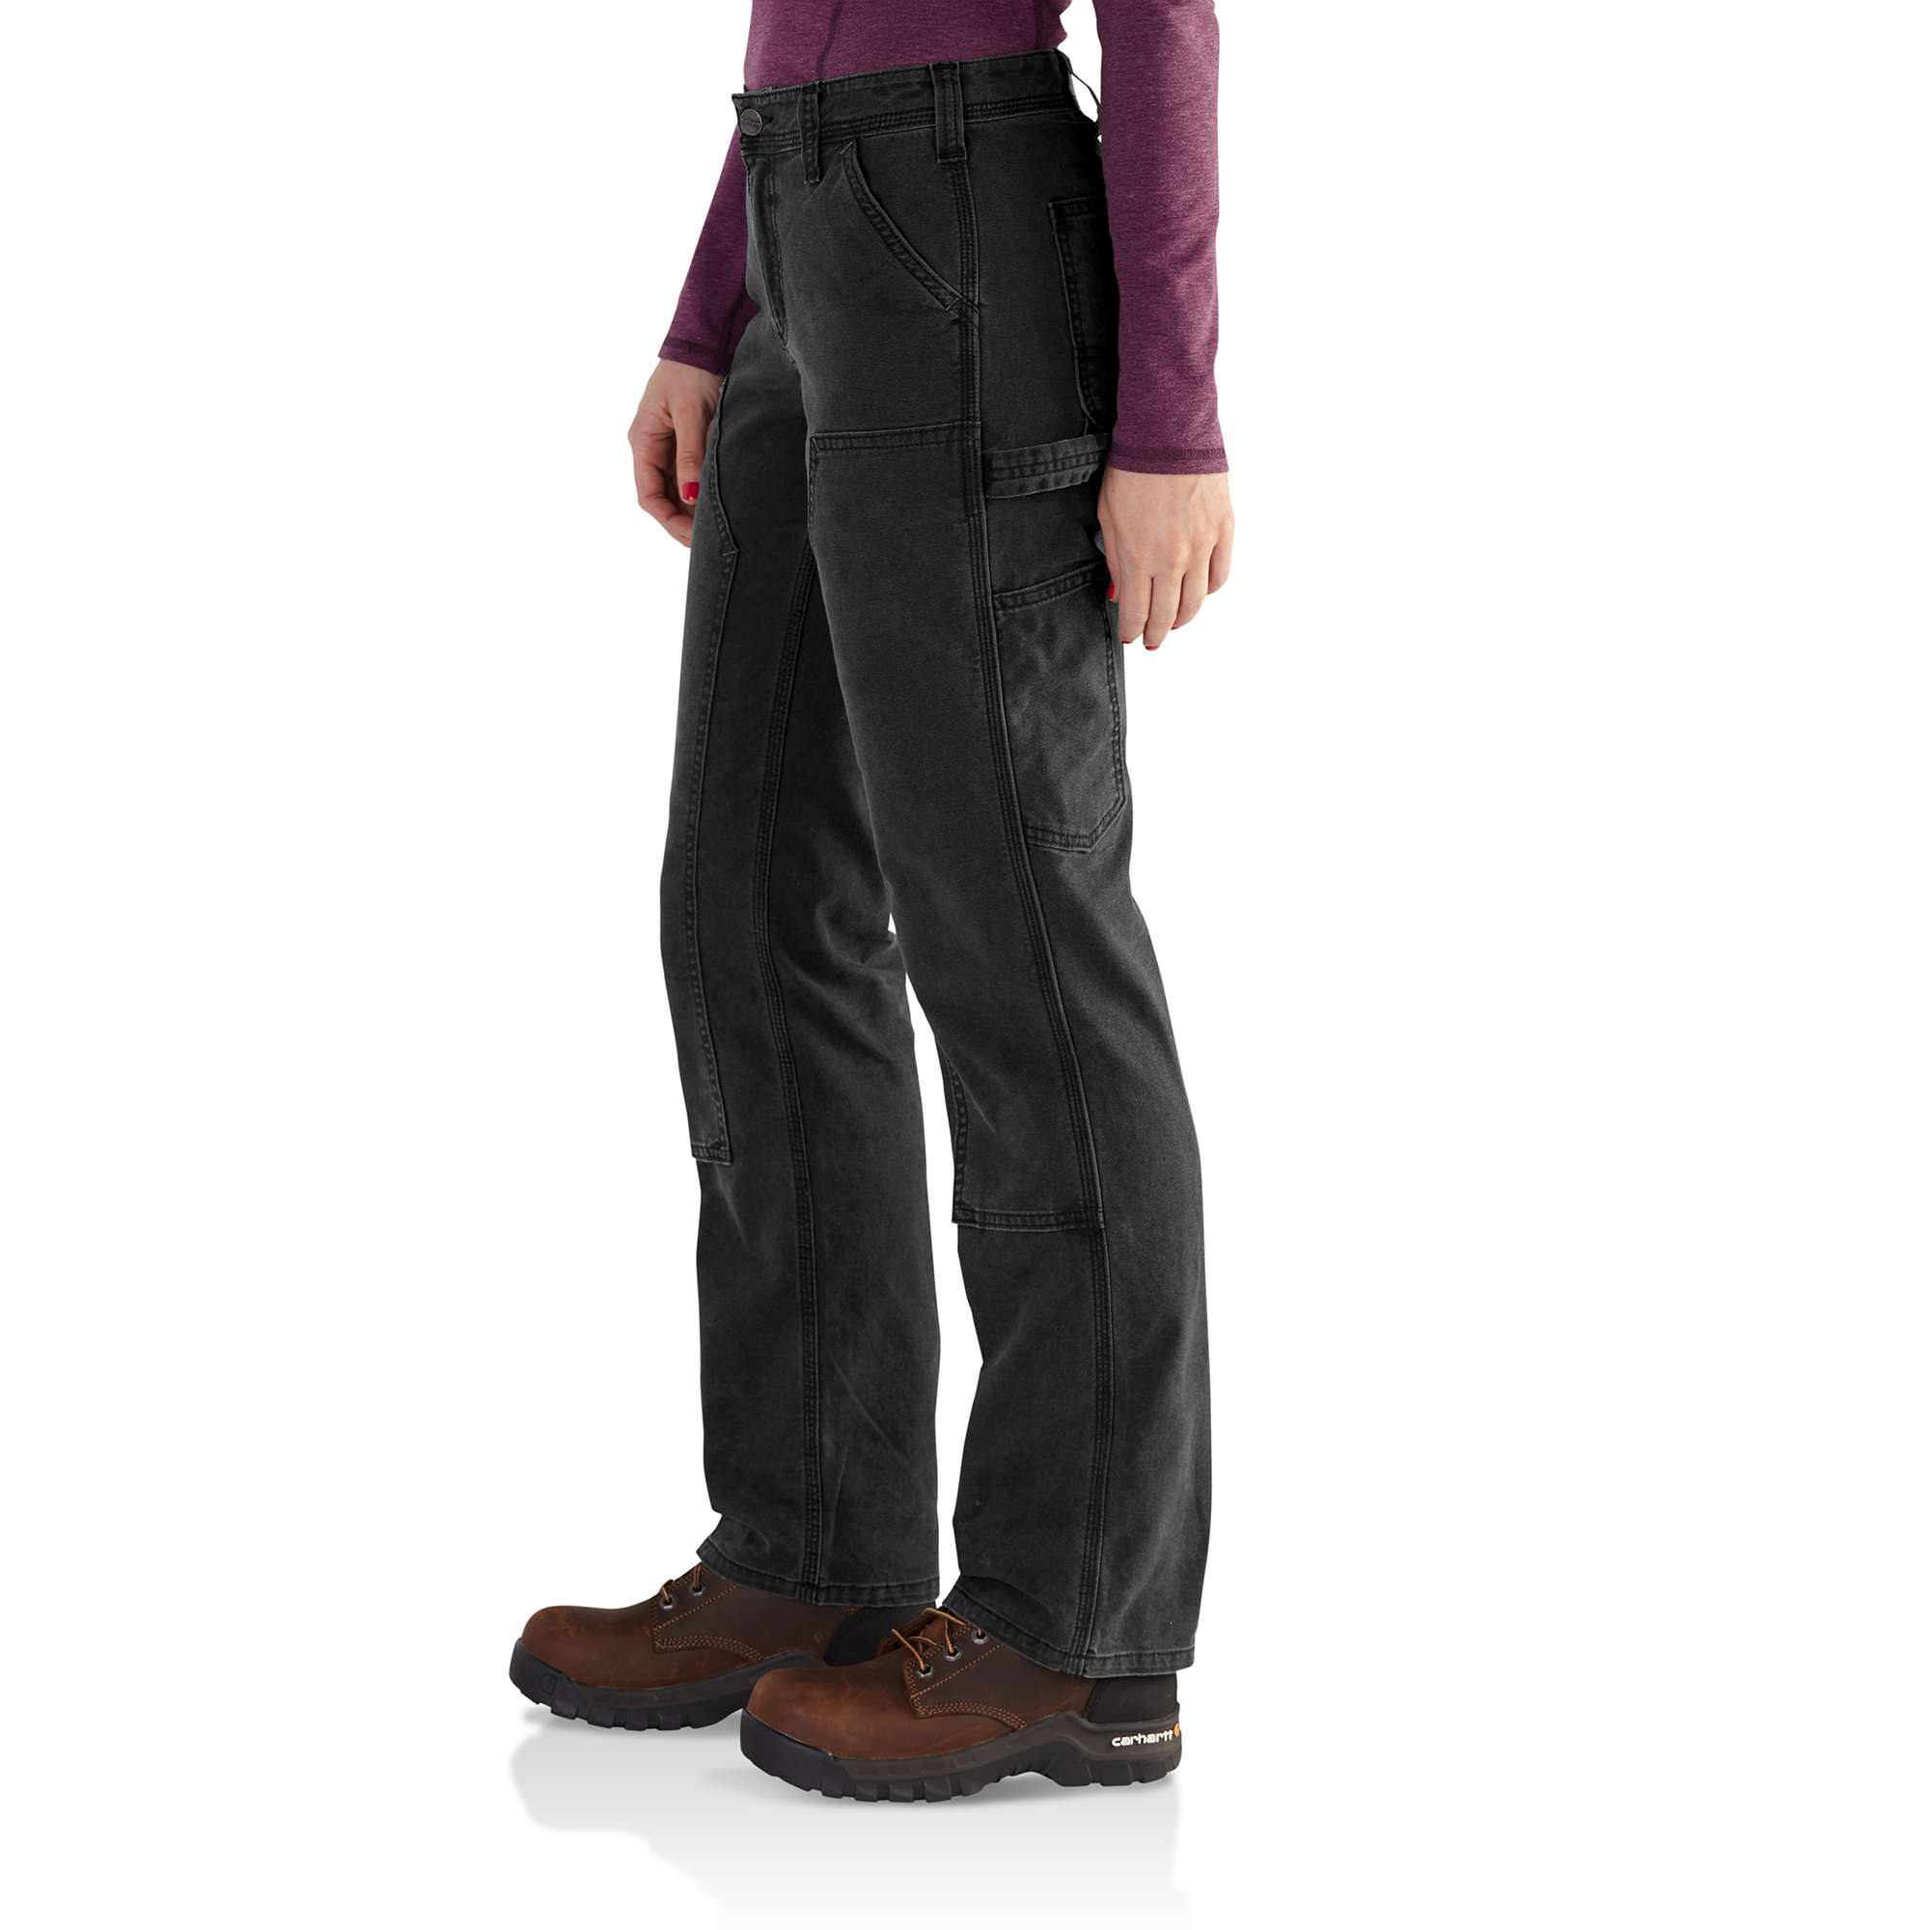 Carhartt Flame Resistant FR Pants Womens Size 10x 30 Khaki Tan | eBay